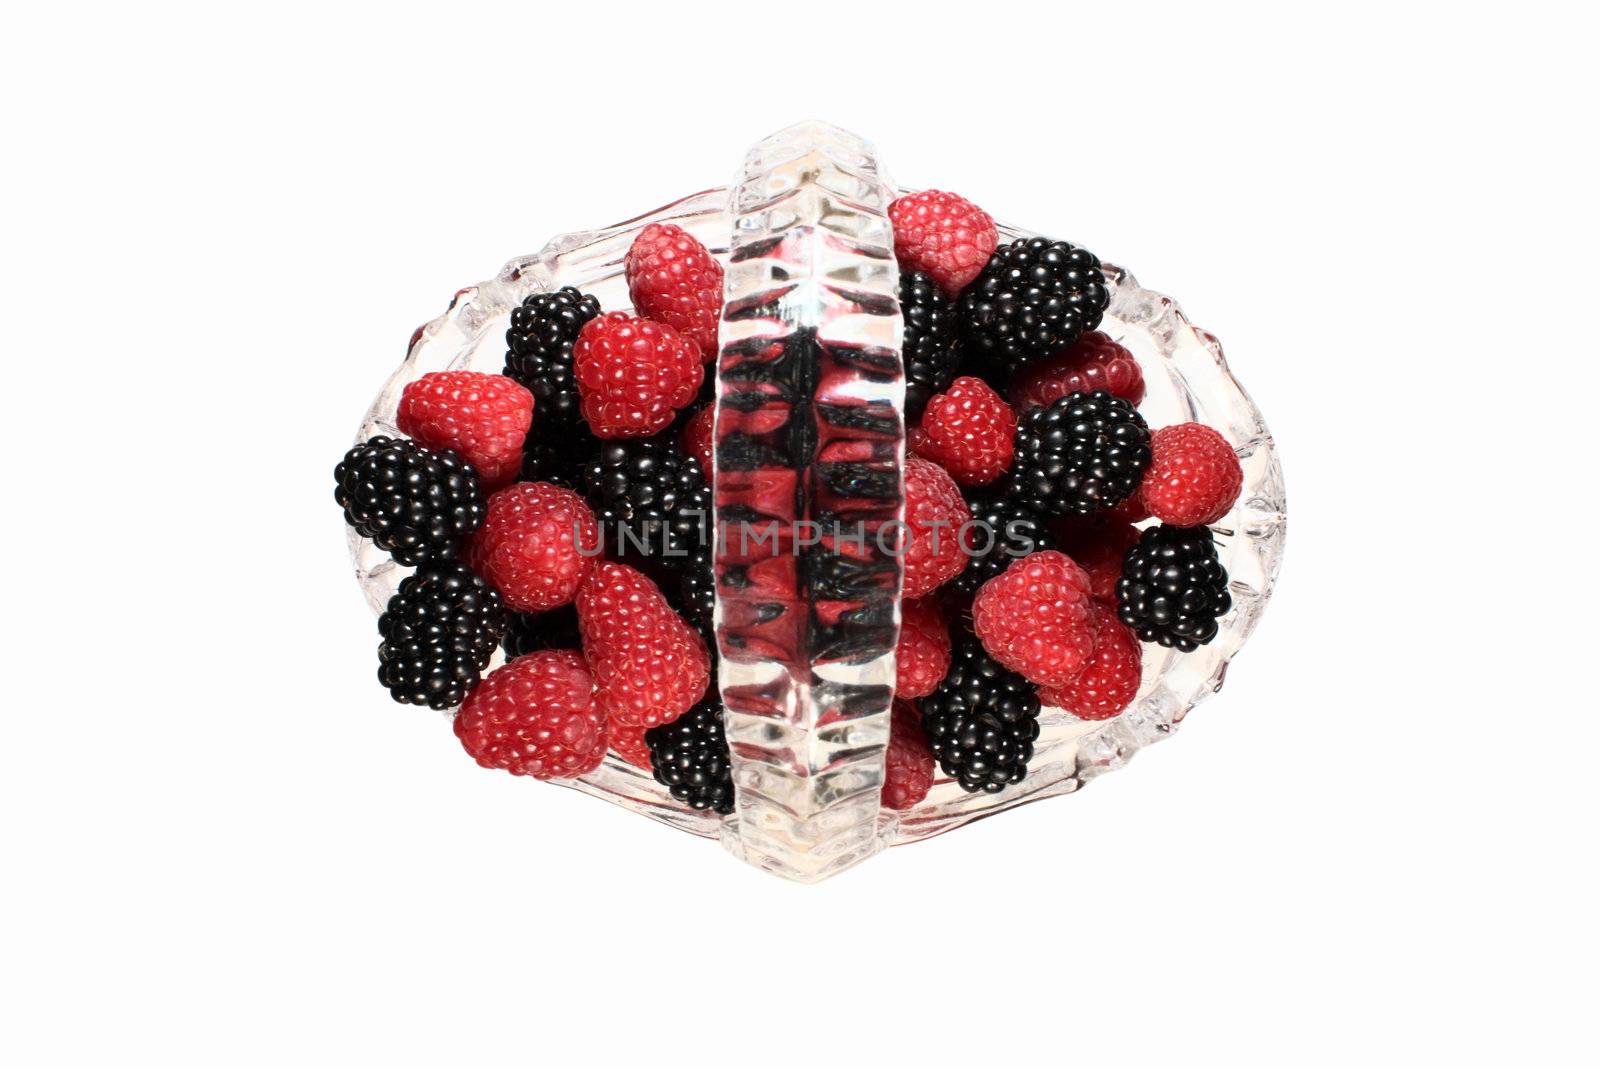 Glass basket full of fresh raspberries and blackberries, top view